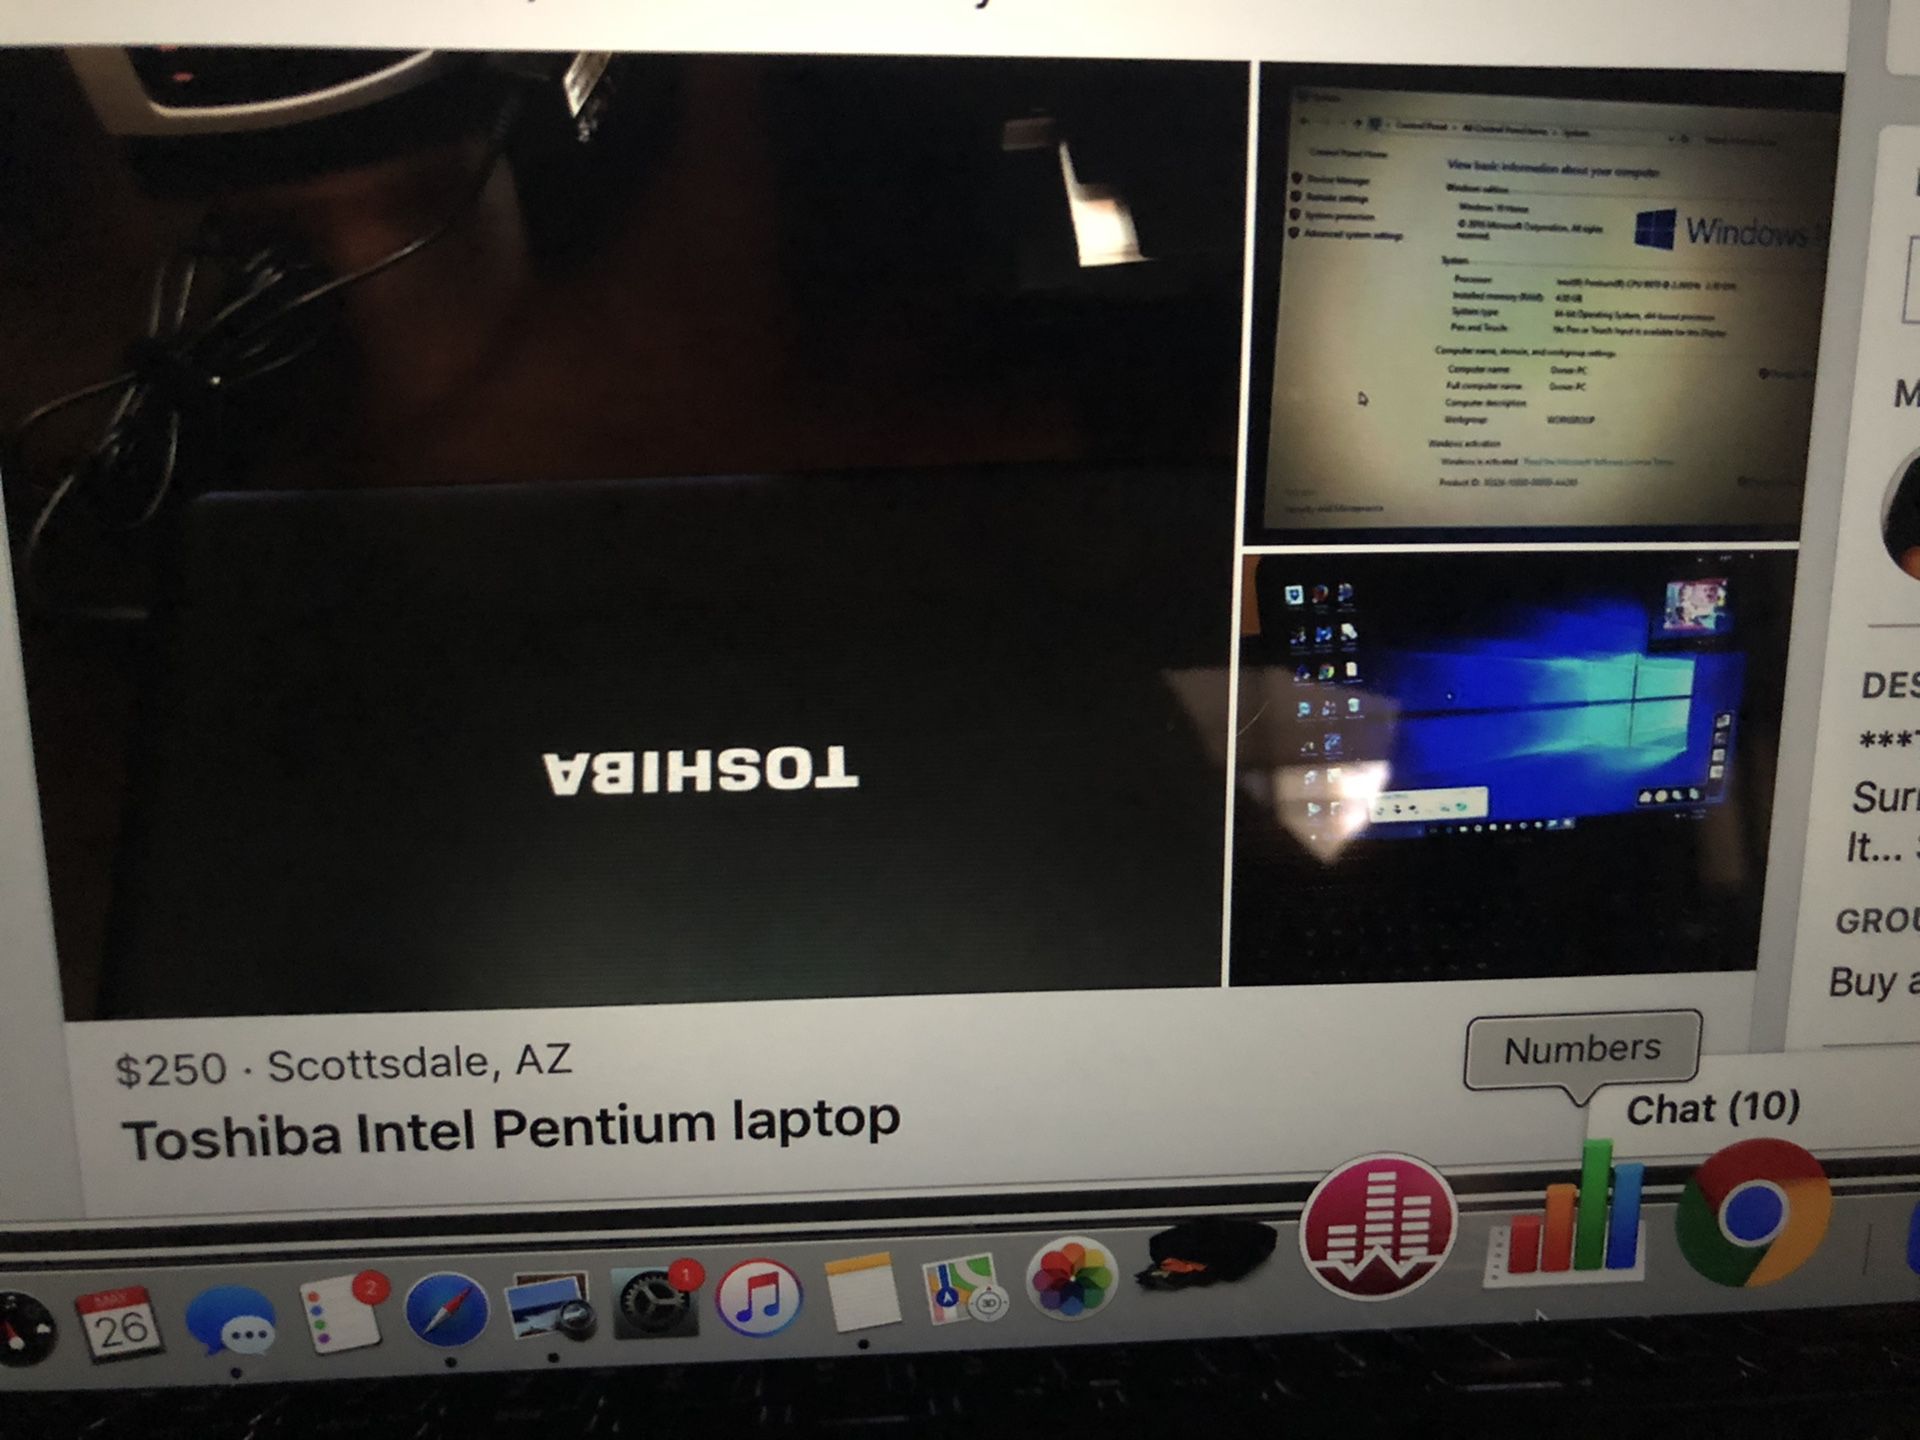 Toshiba Intel Pentium laptop